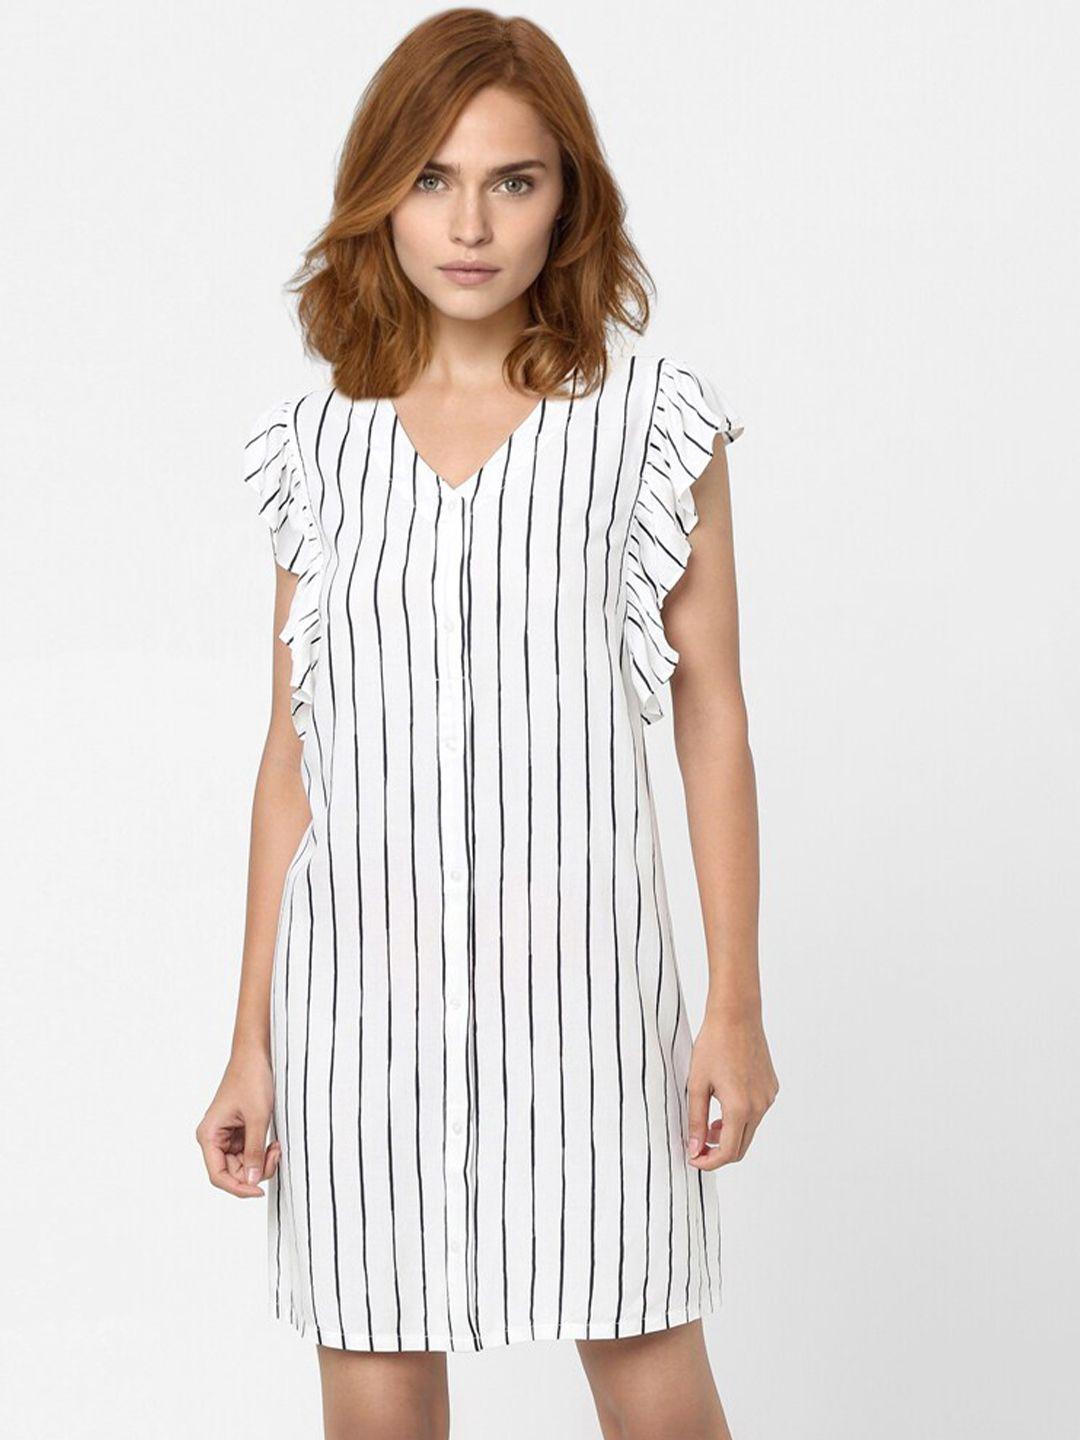 vero moda white & black striped a-line dress